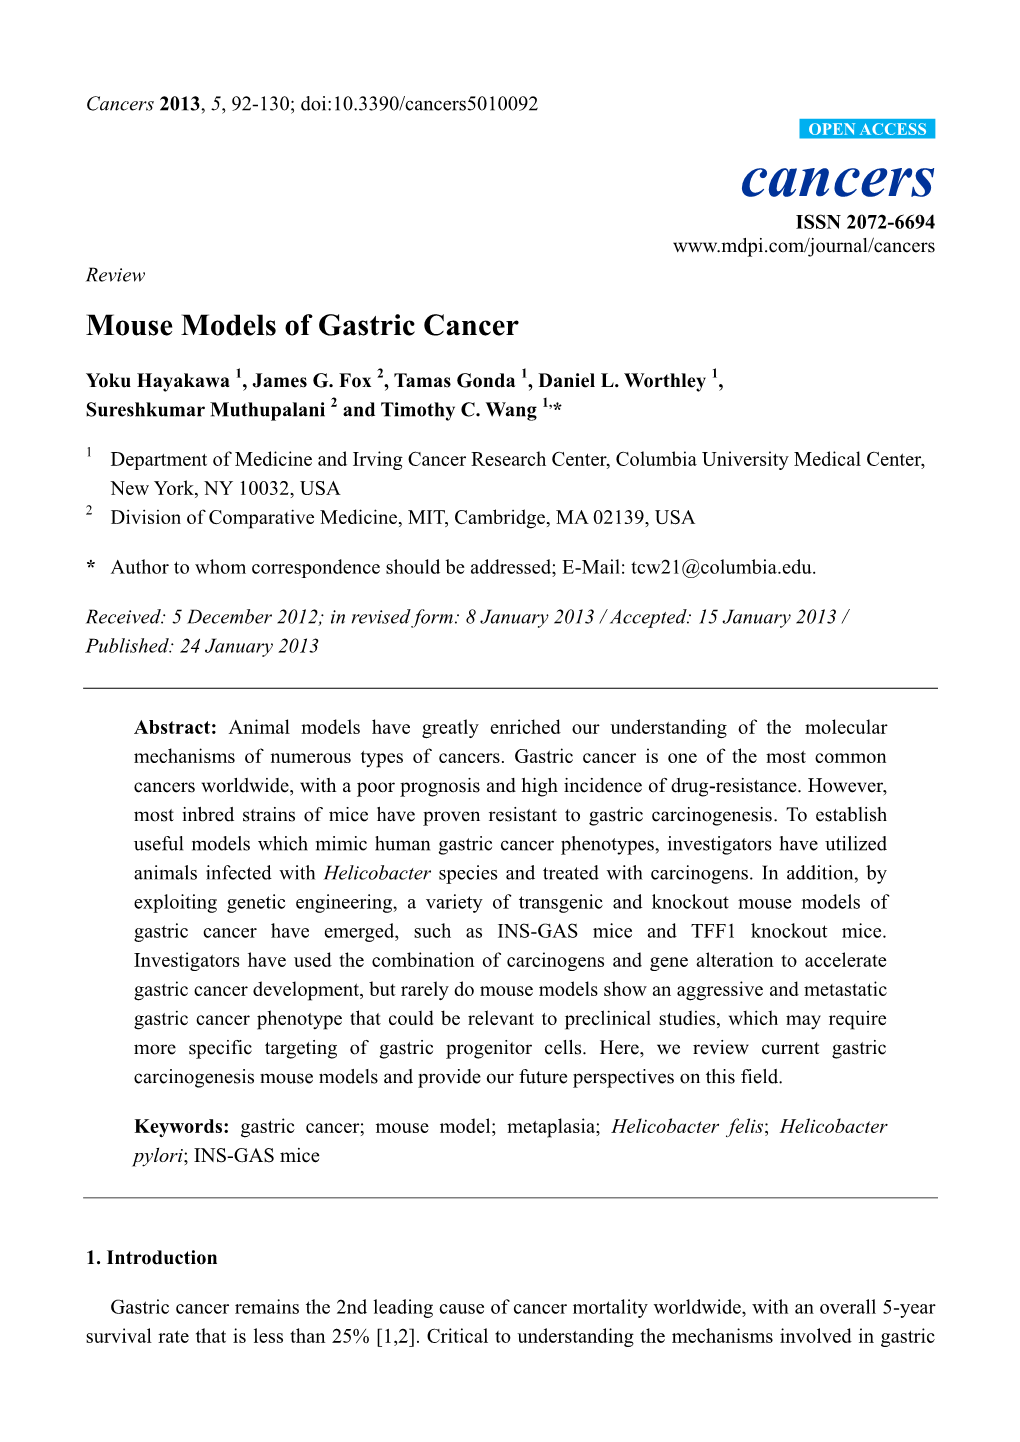 Mouse Models of Gastric Cancer